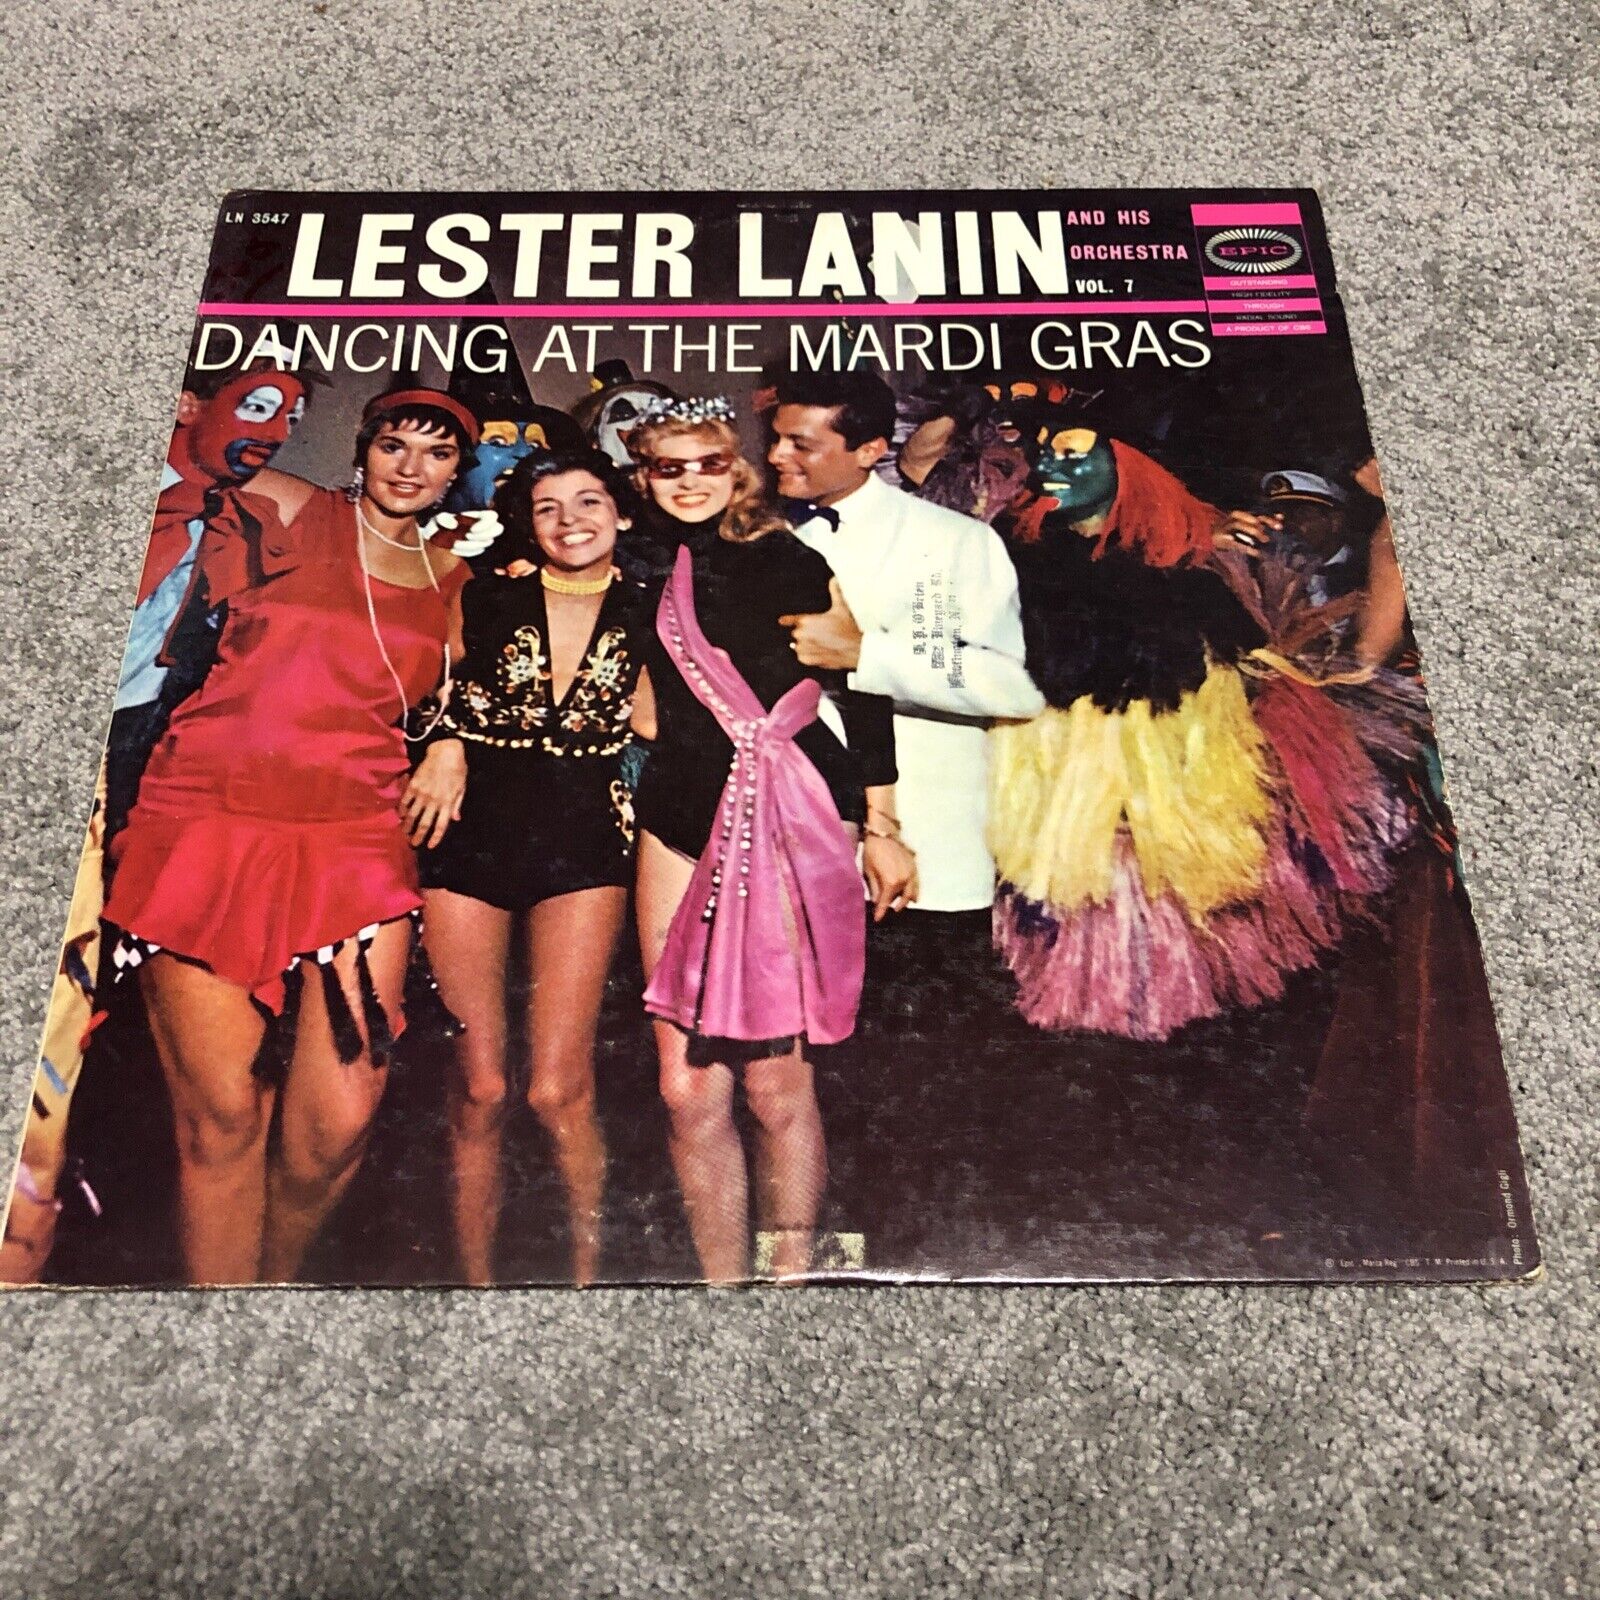 LESTER LANIN AND HIS ORCHESTRA DANCING AT THE MARDI GRAS VOL 7 LP VINYL RECORD 